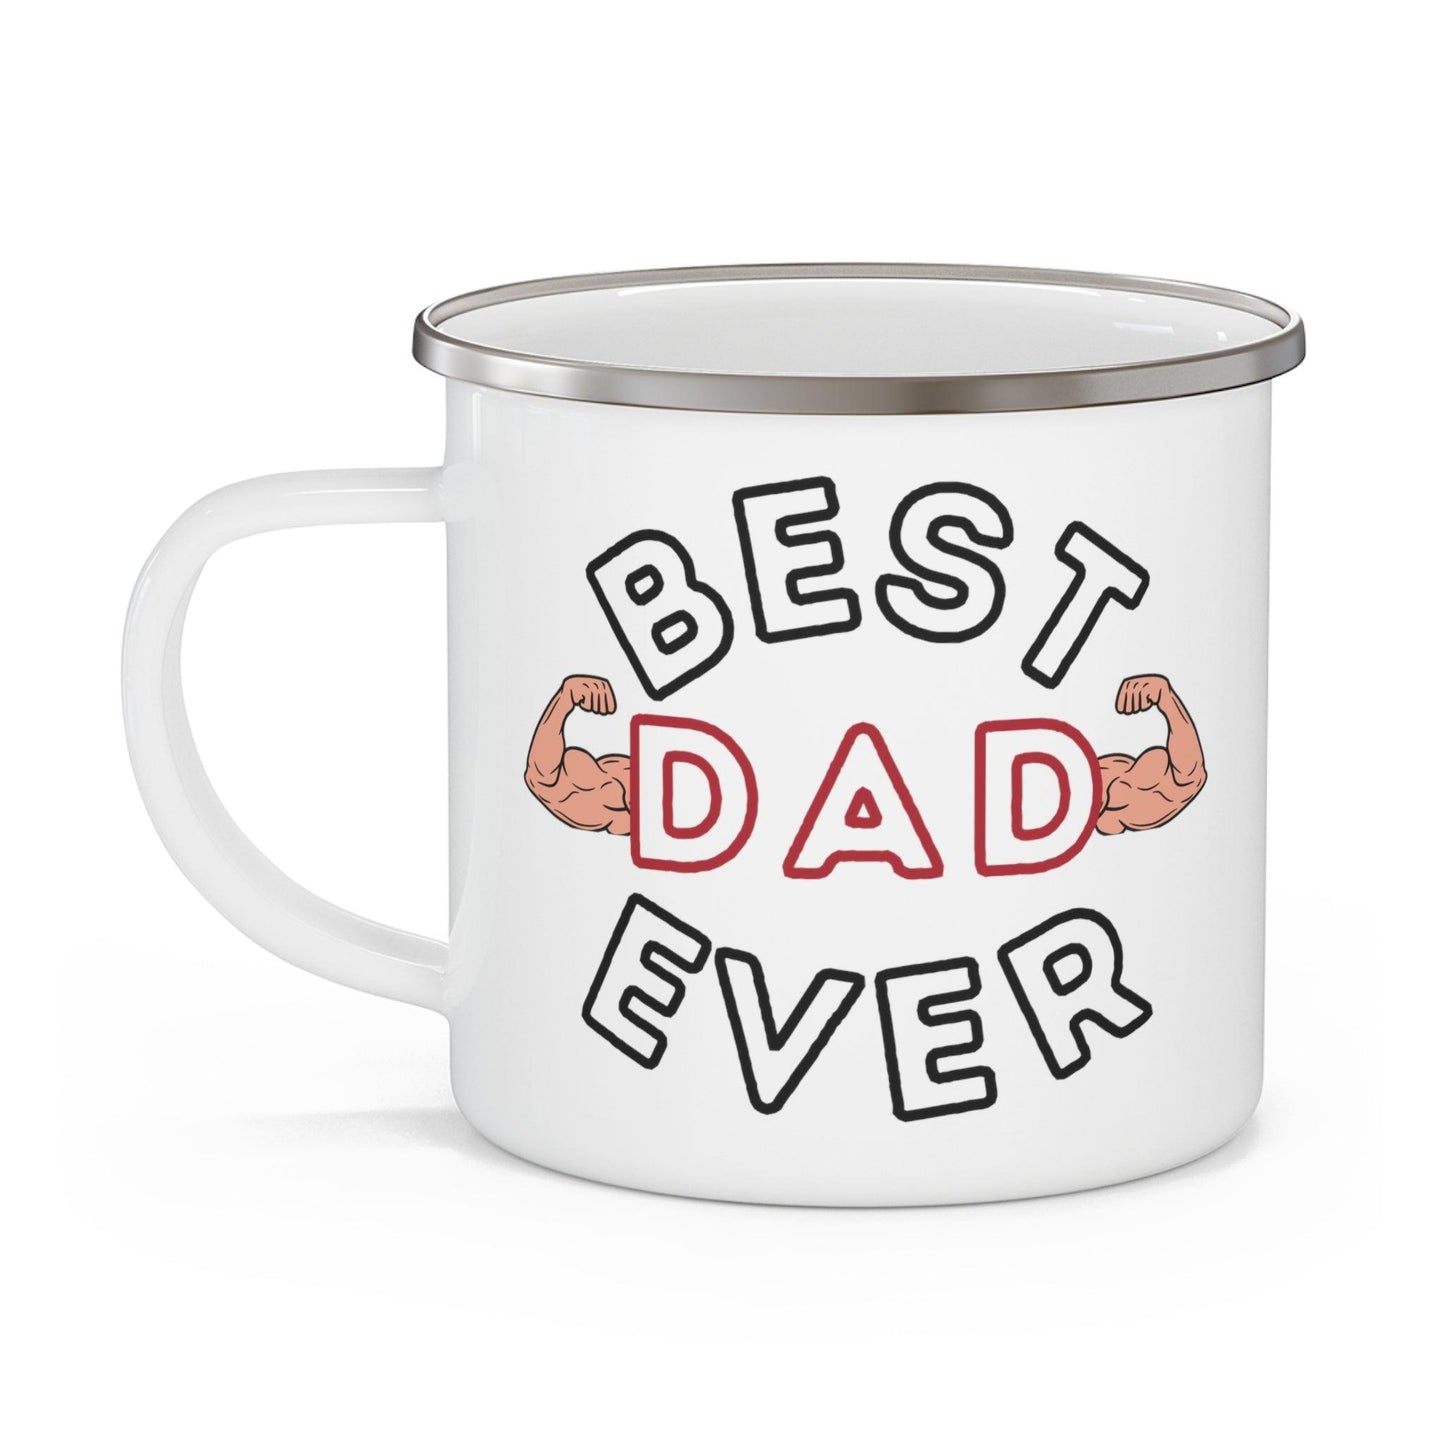 Best Dad Ever Mug, Enamel Camping Mug, Camping gift, Gift for dad, Father's day gift, Dad Mug, Dad gift